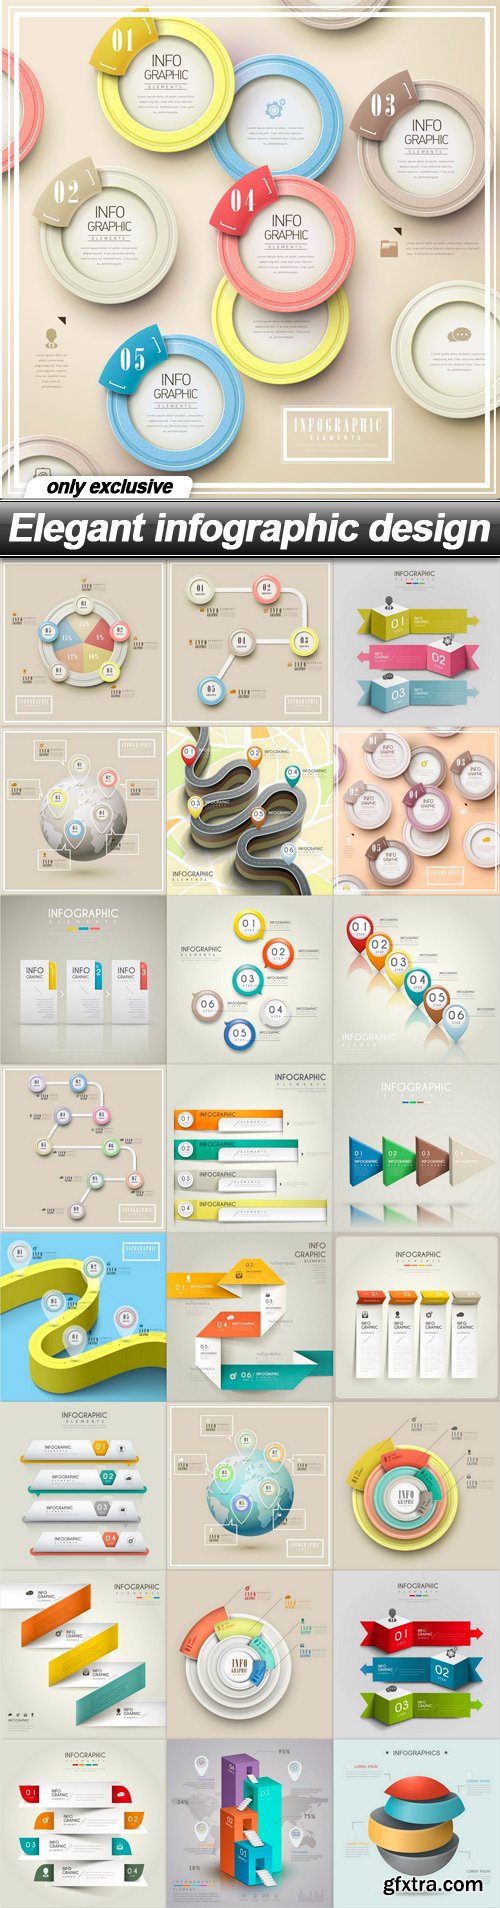 Elegant infographic design - 25 EPS